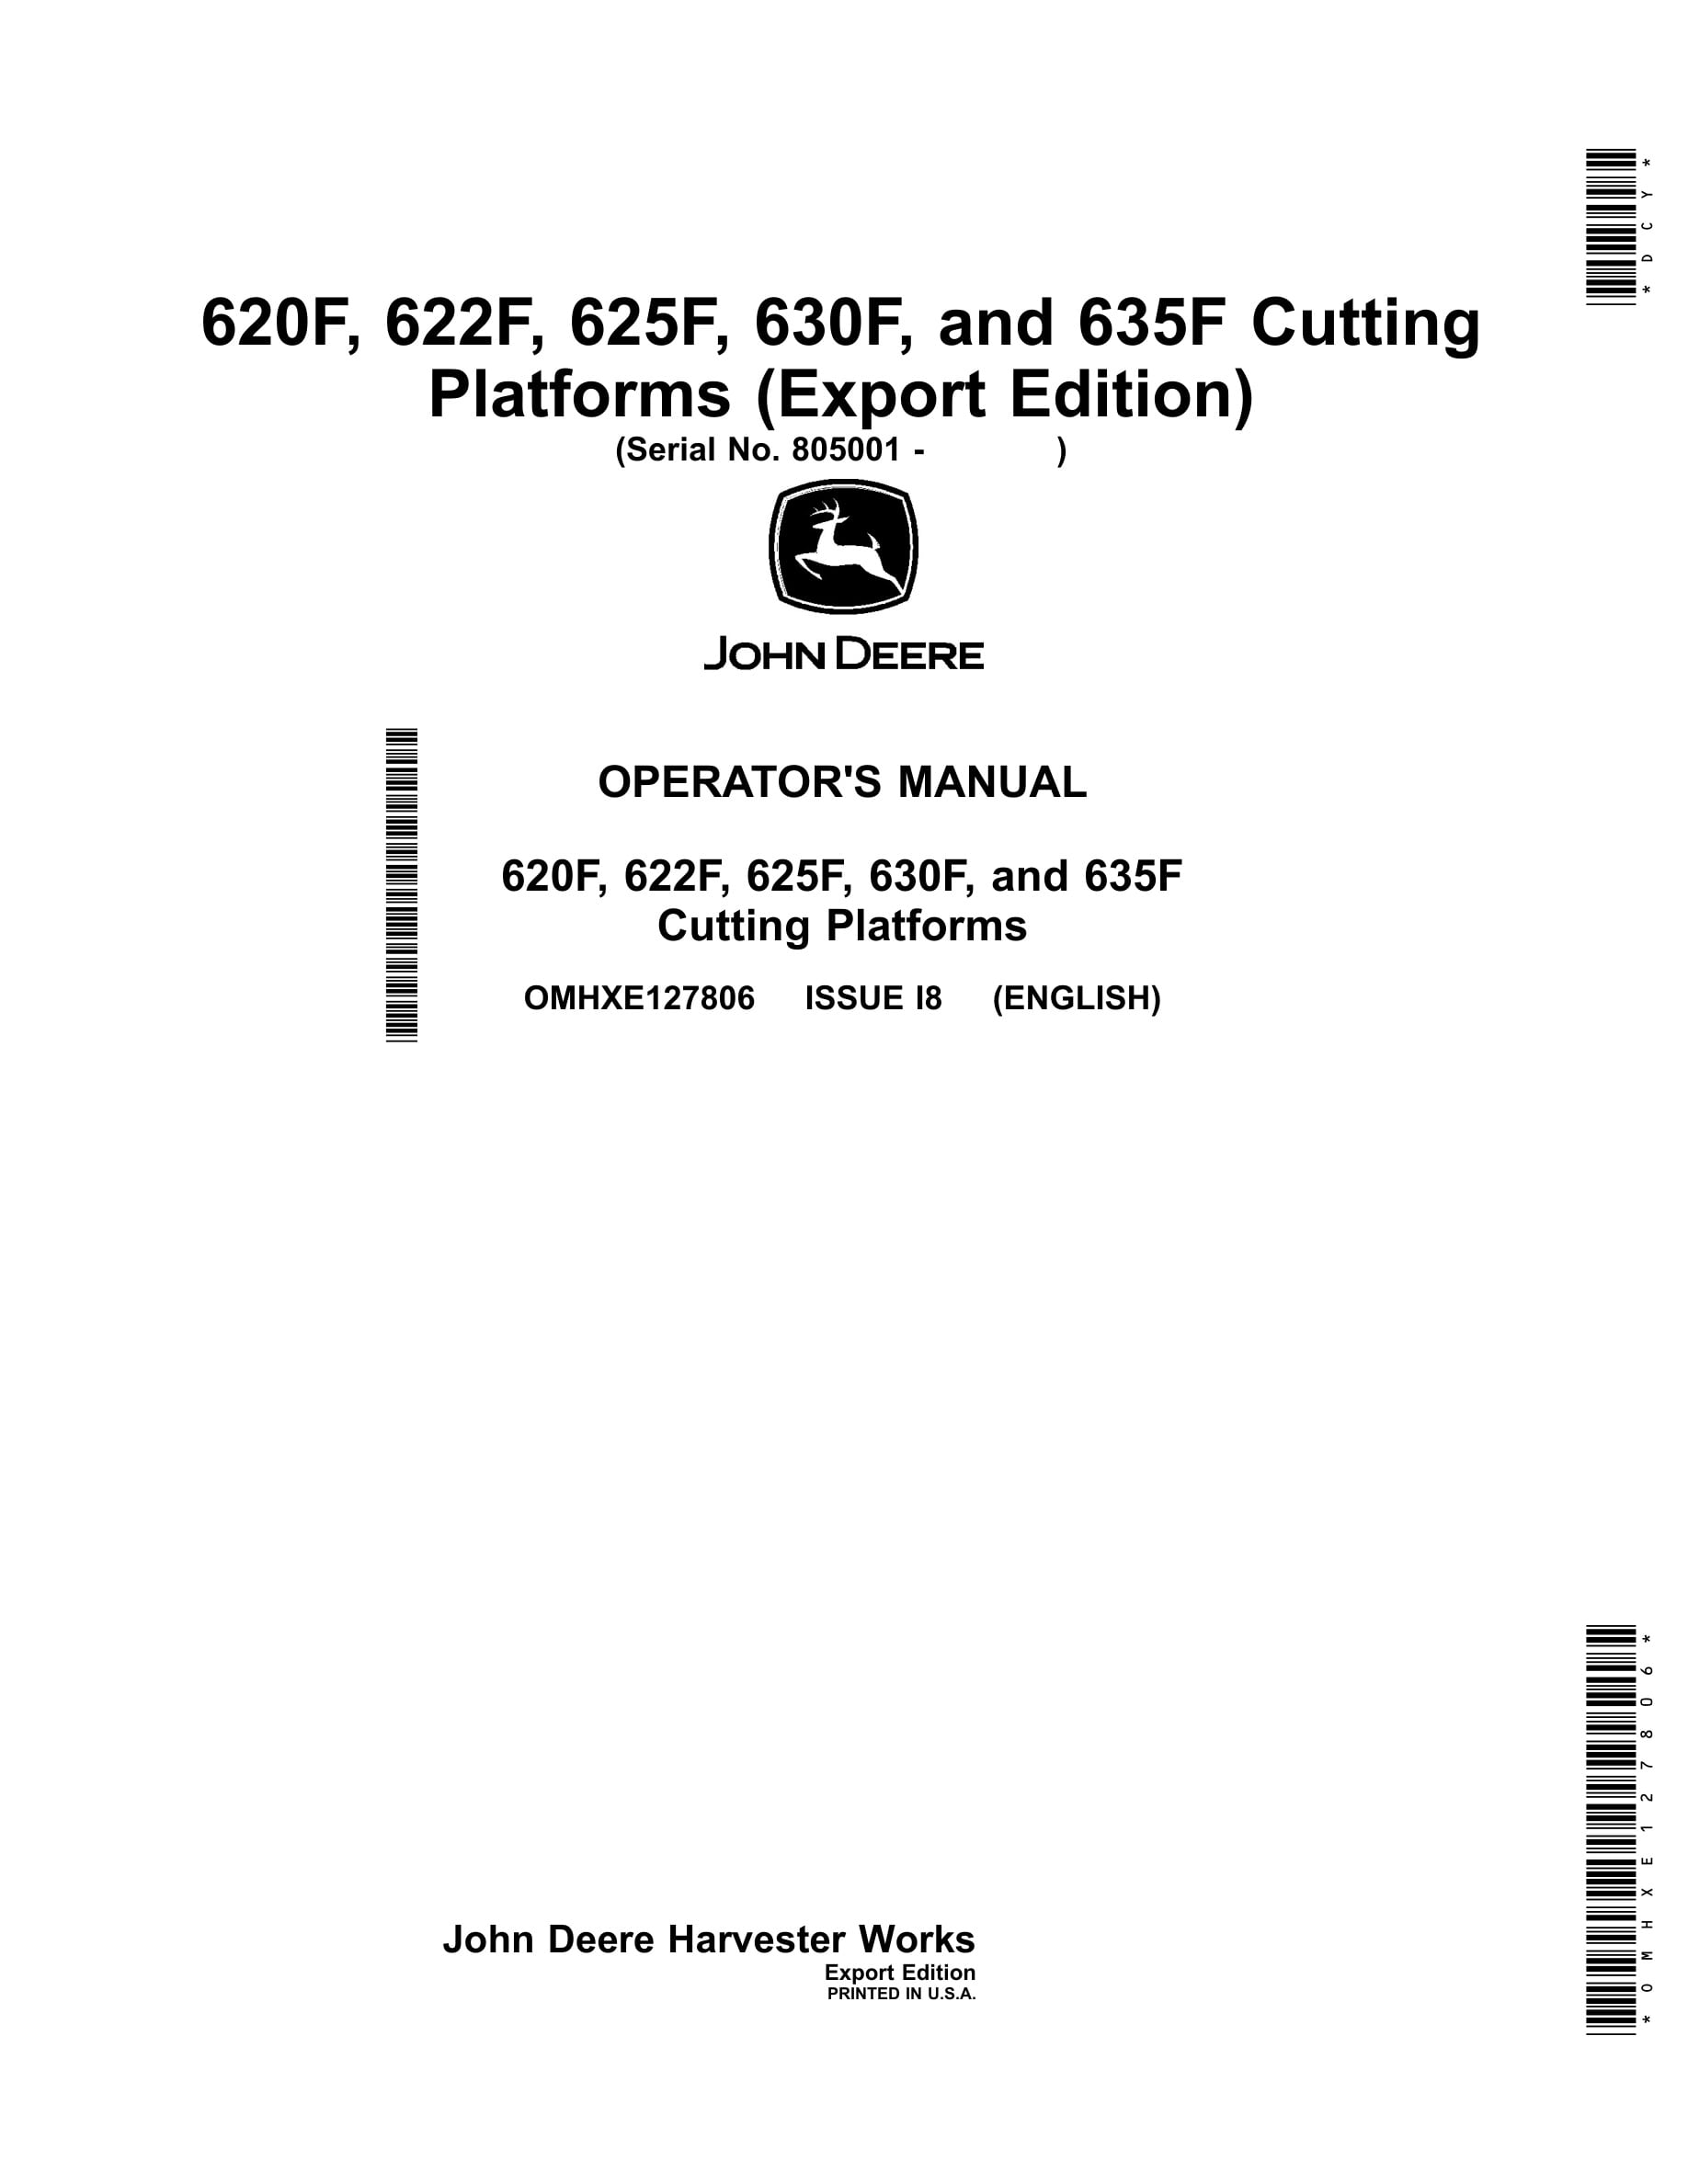 John Deere 620F, 622F, 625F, 630F, and 635F Cutting Platforms Operator Manual OMHXE127806-1